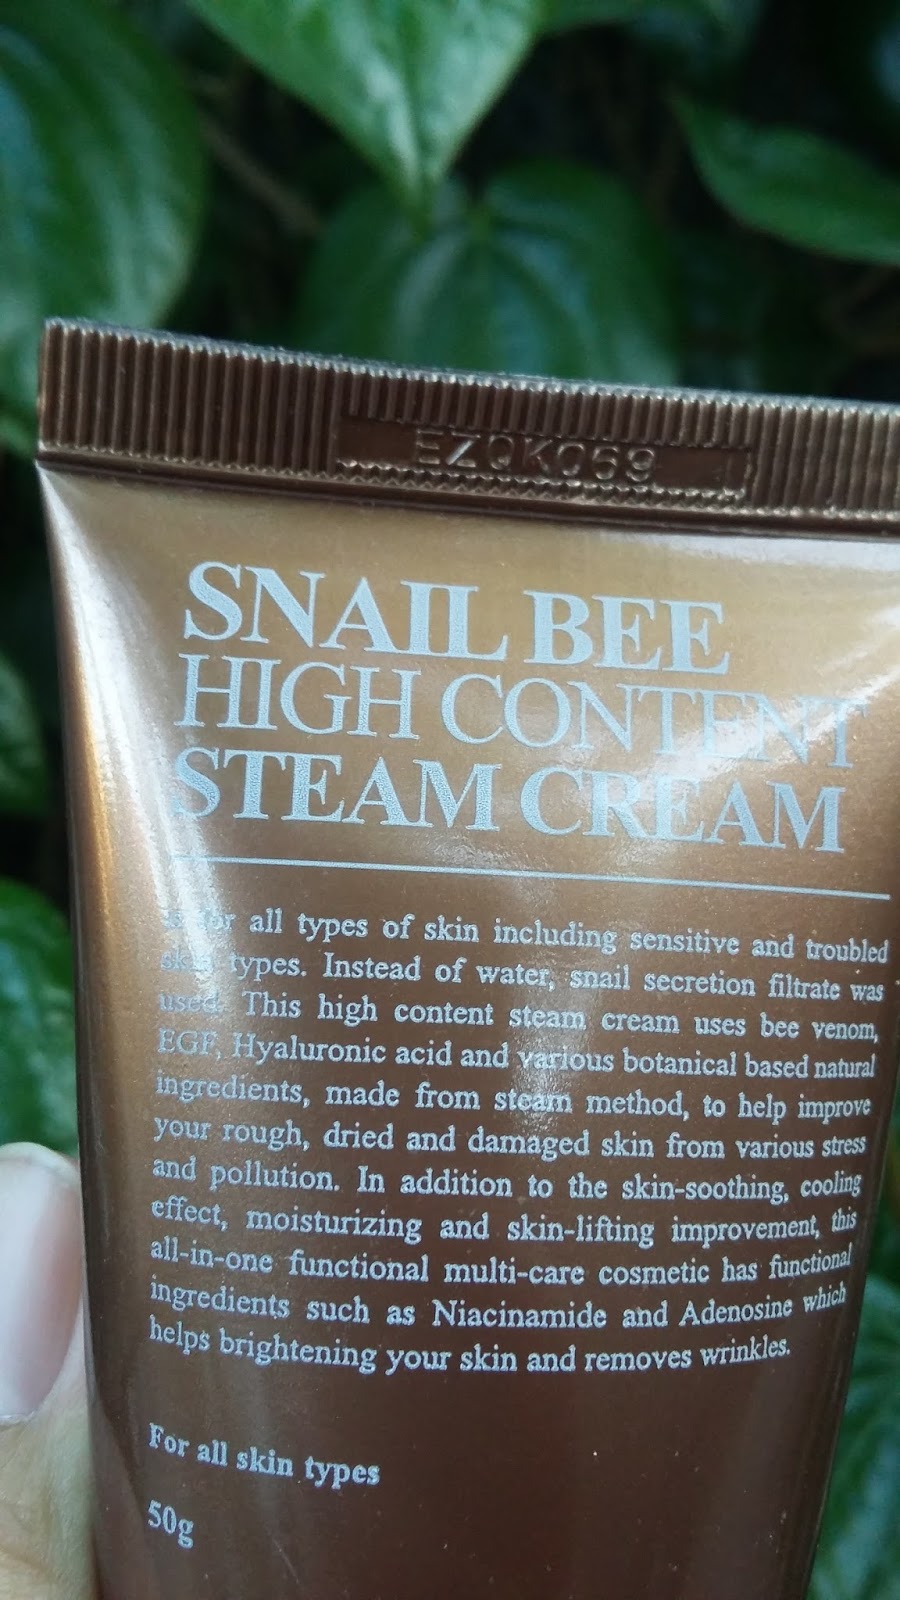 Snail bee steam cream фото 33